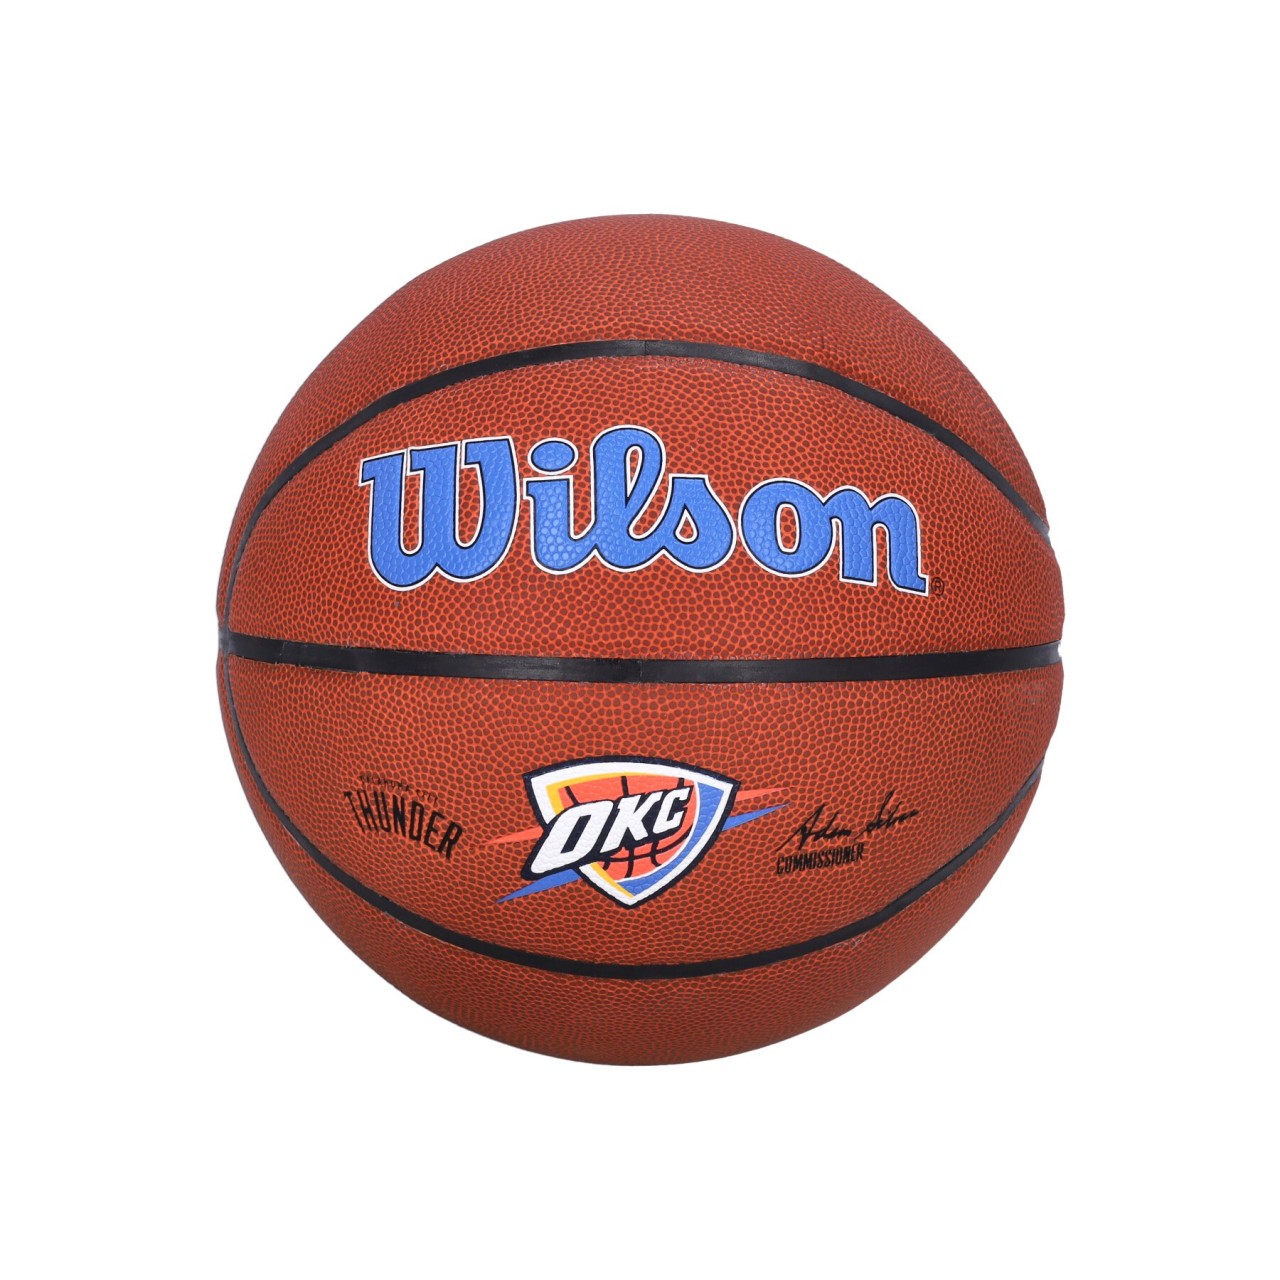 WILSON TEAM NBA TEAM ALLIANCE BASKETBALL SIZE 7 OKLTHU WTB3100XBOKC